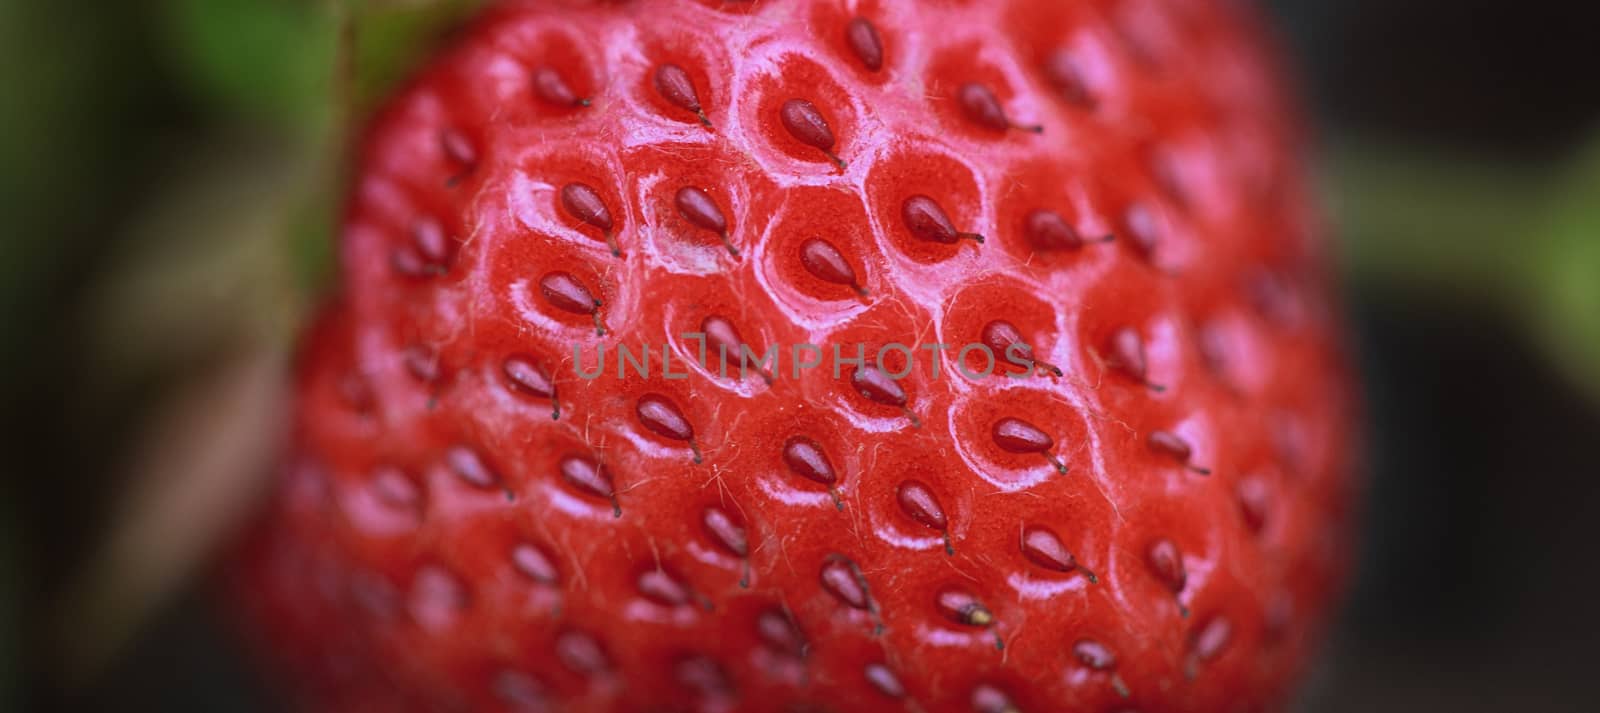 Strawberry On Bush macro shot by tadeush89